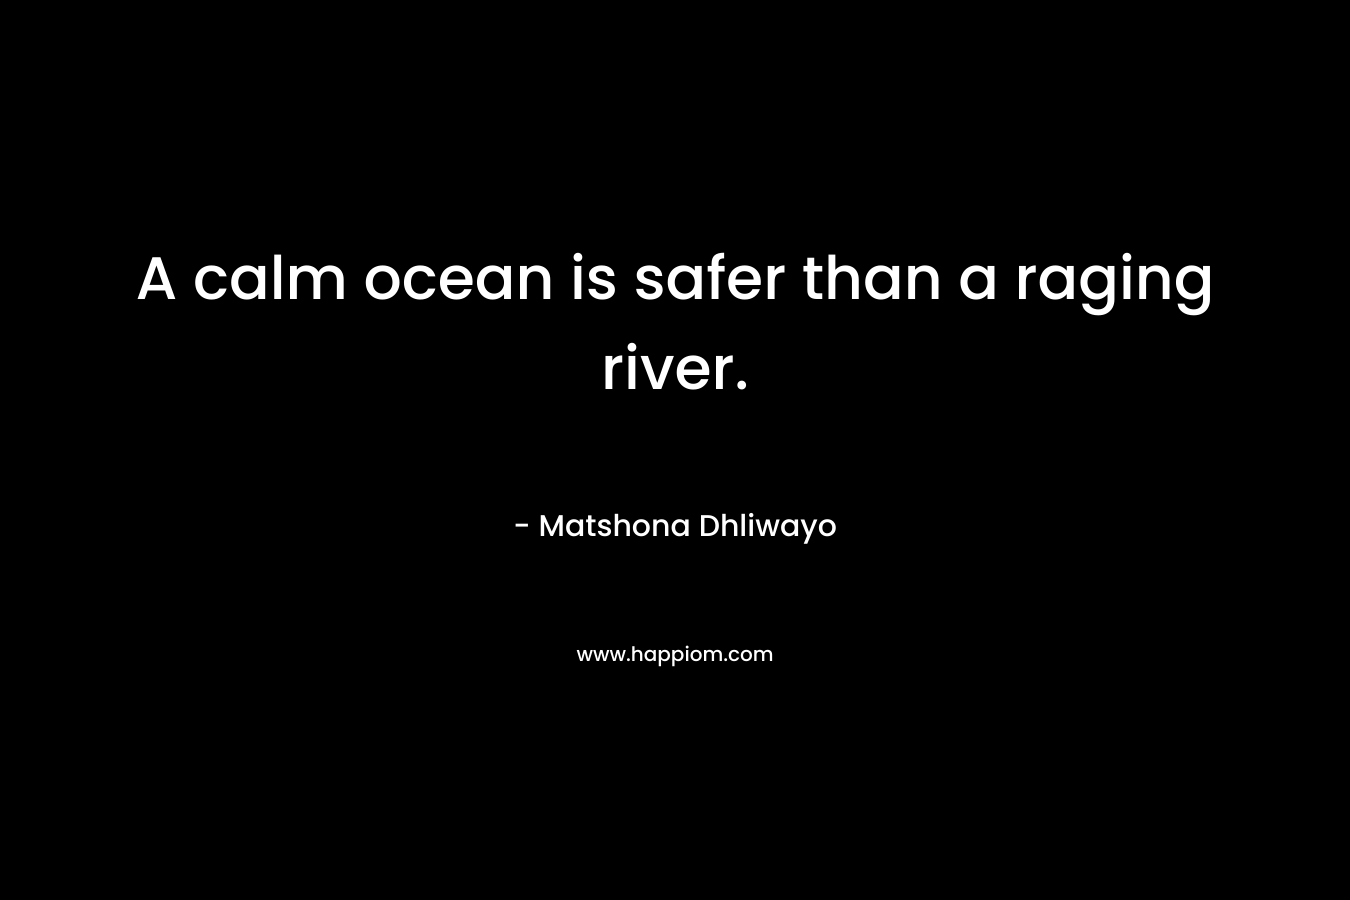 A calm ocean is safer than a raging river.